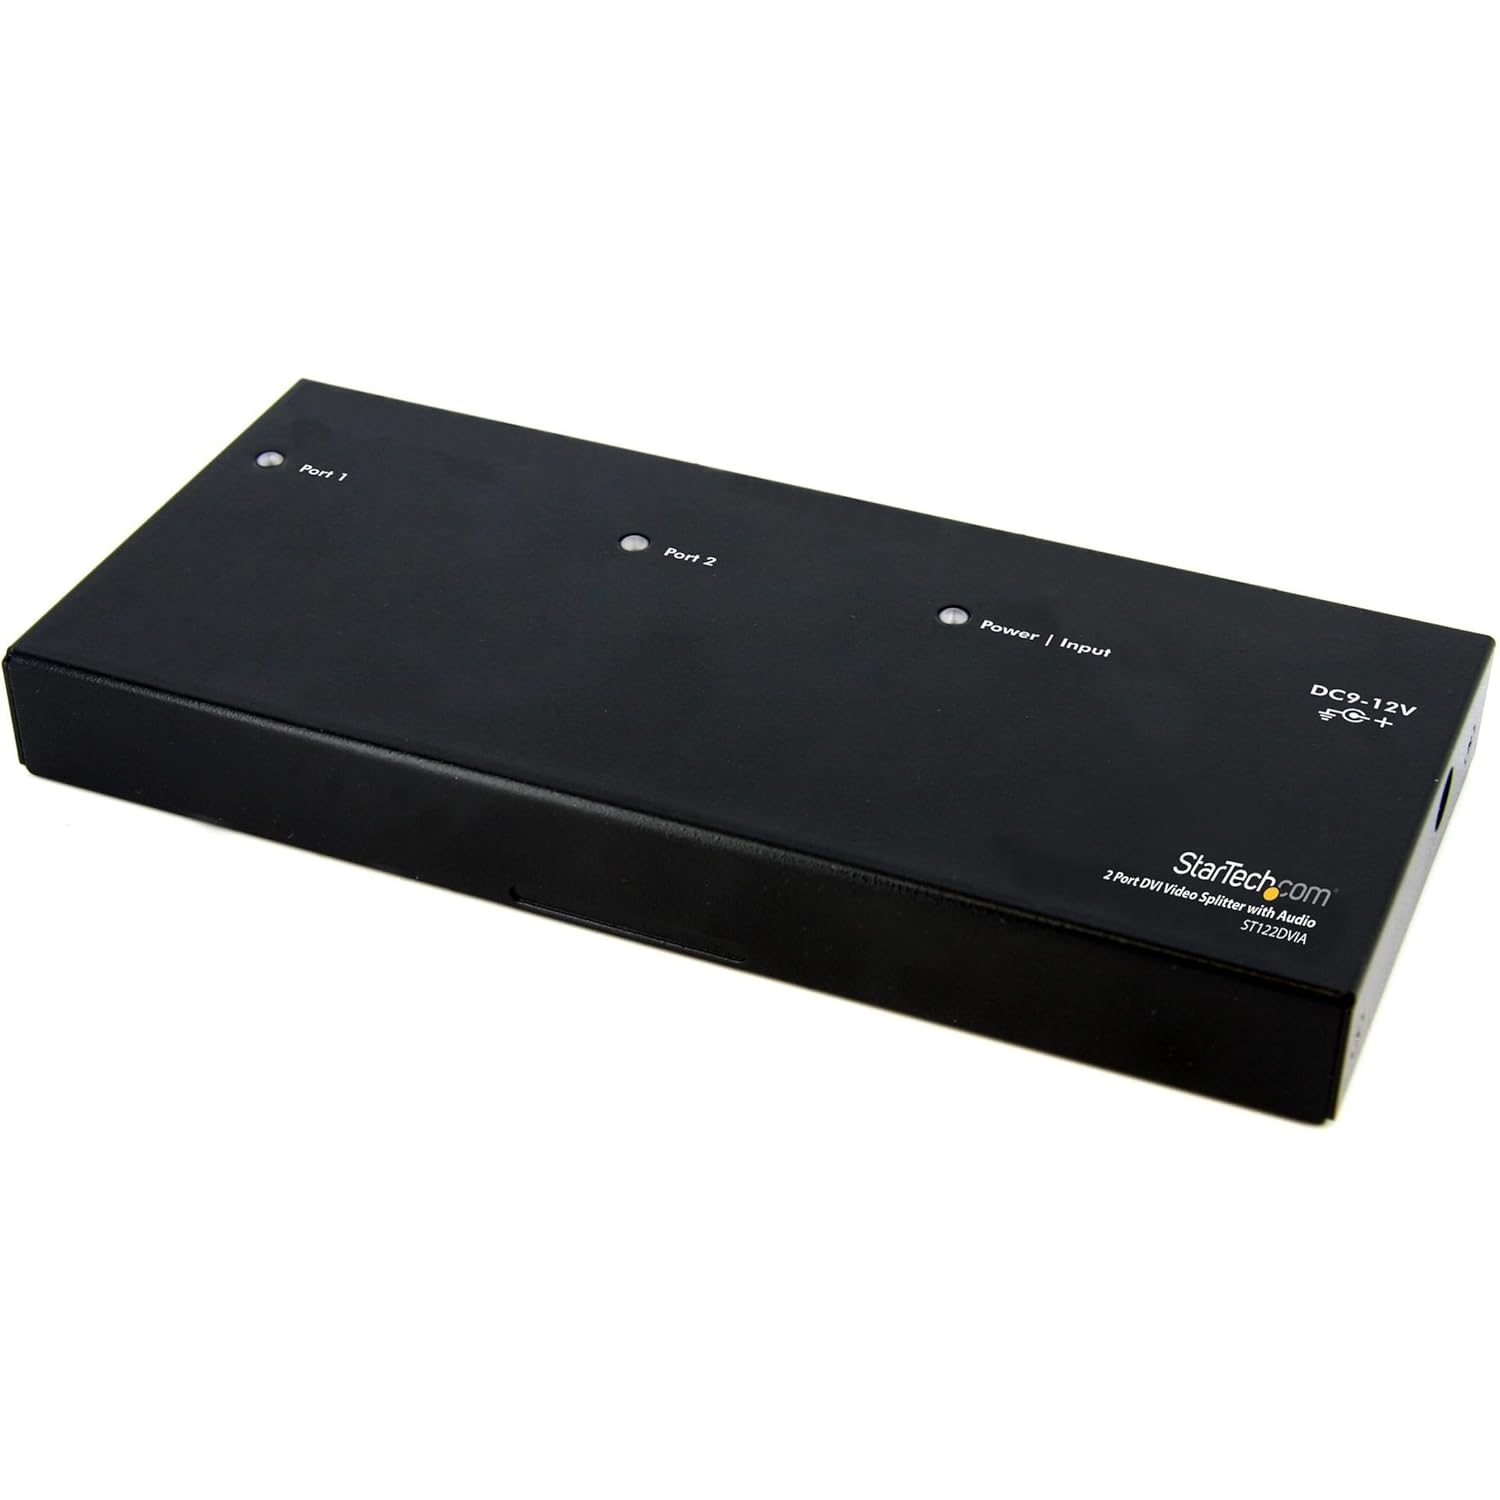 2 Port DVI Video Splitter with Audio - DVI Splitter with Audio - 2 Port DVI Splitter - DVI Video Splitter